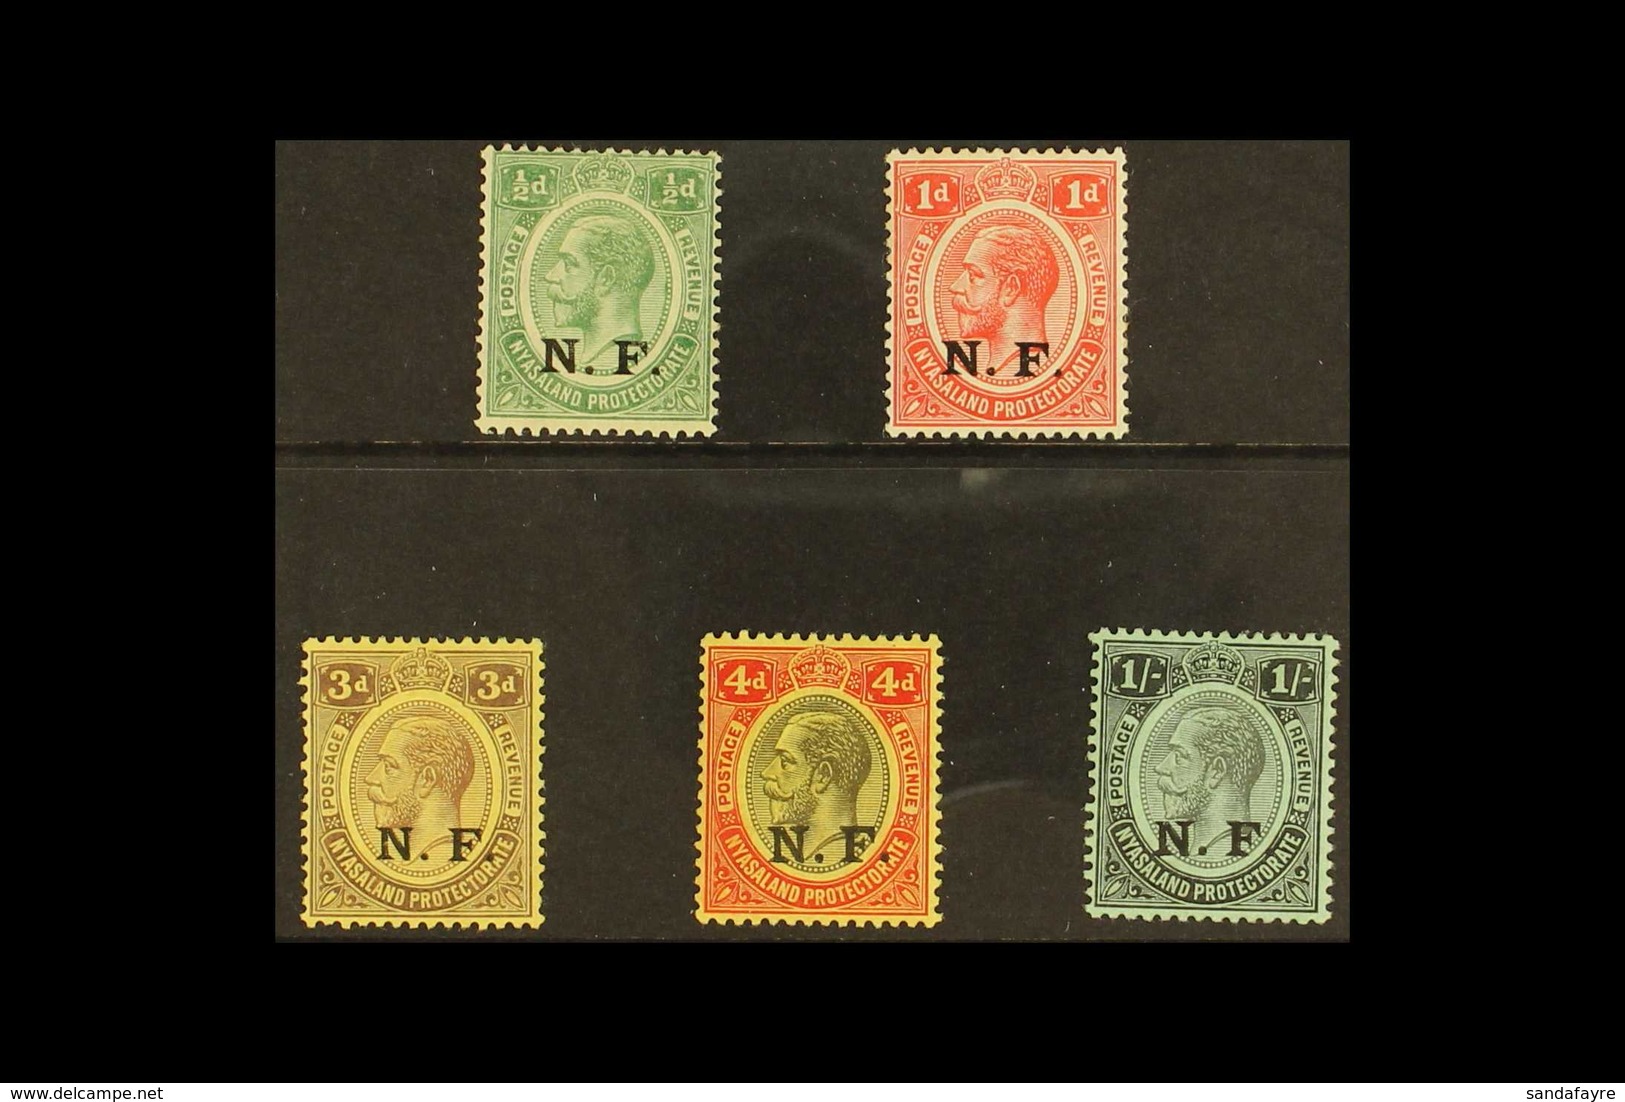 NYASALAND-RHODESIAN FORCE  1916 "N.F." Overprinted Set, SG N1/N5, Fine Mint (5 Stamps) For More Images, Please Visit Htt - Tanganyika (...-1932)